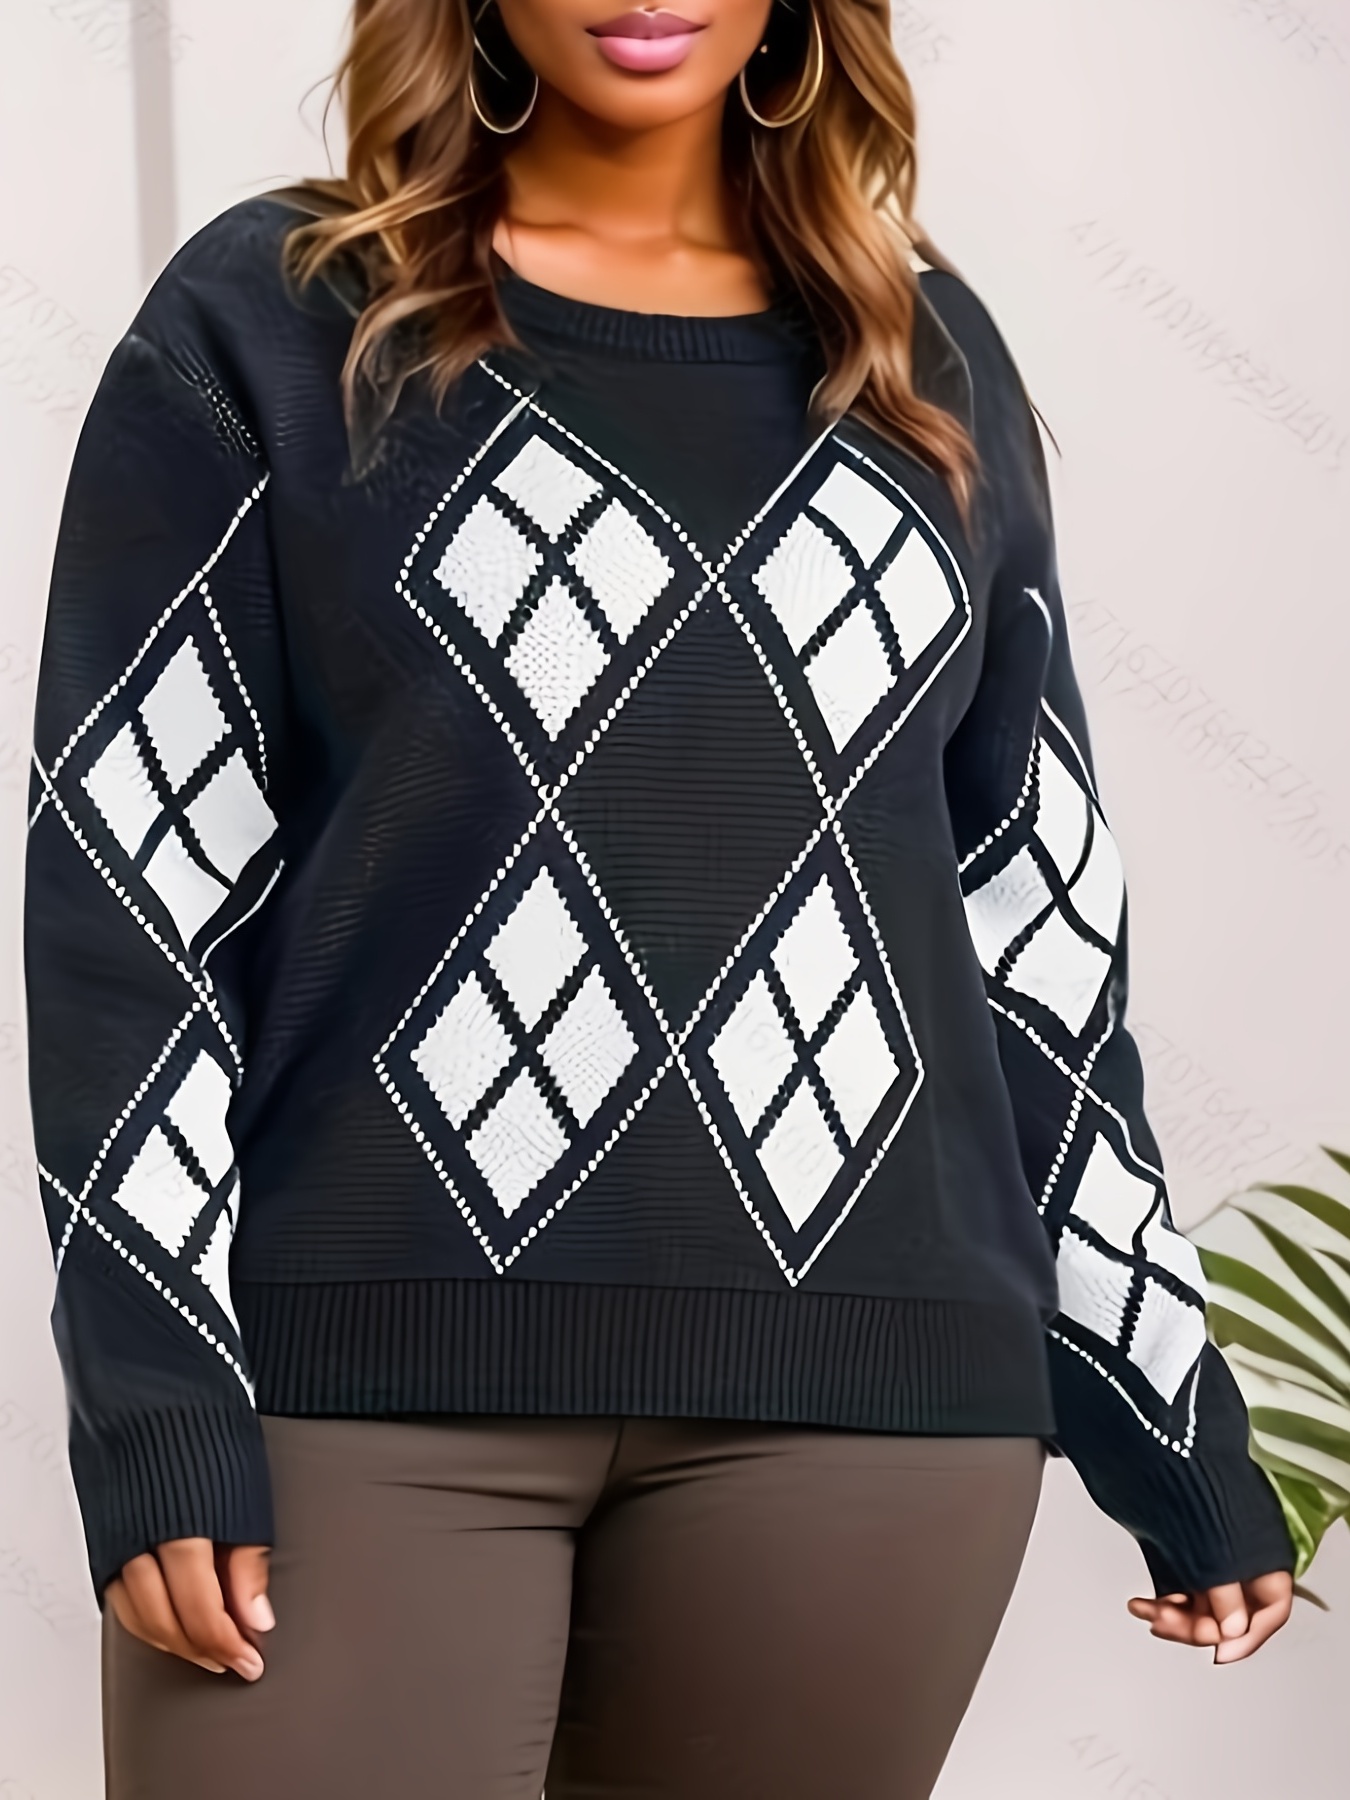 Ellos Women's Plus Size V-Neck Argyle Sweater Pullover - S, Slate Hot Pink